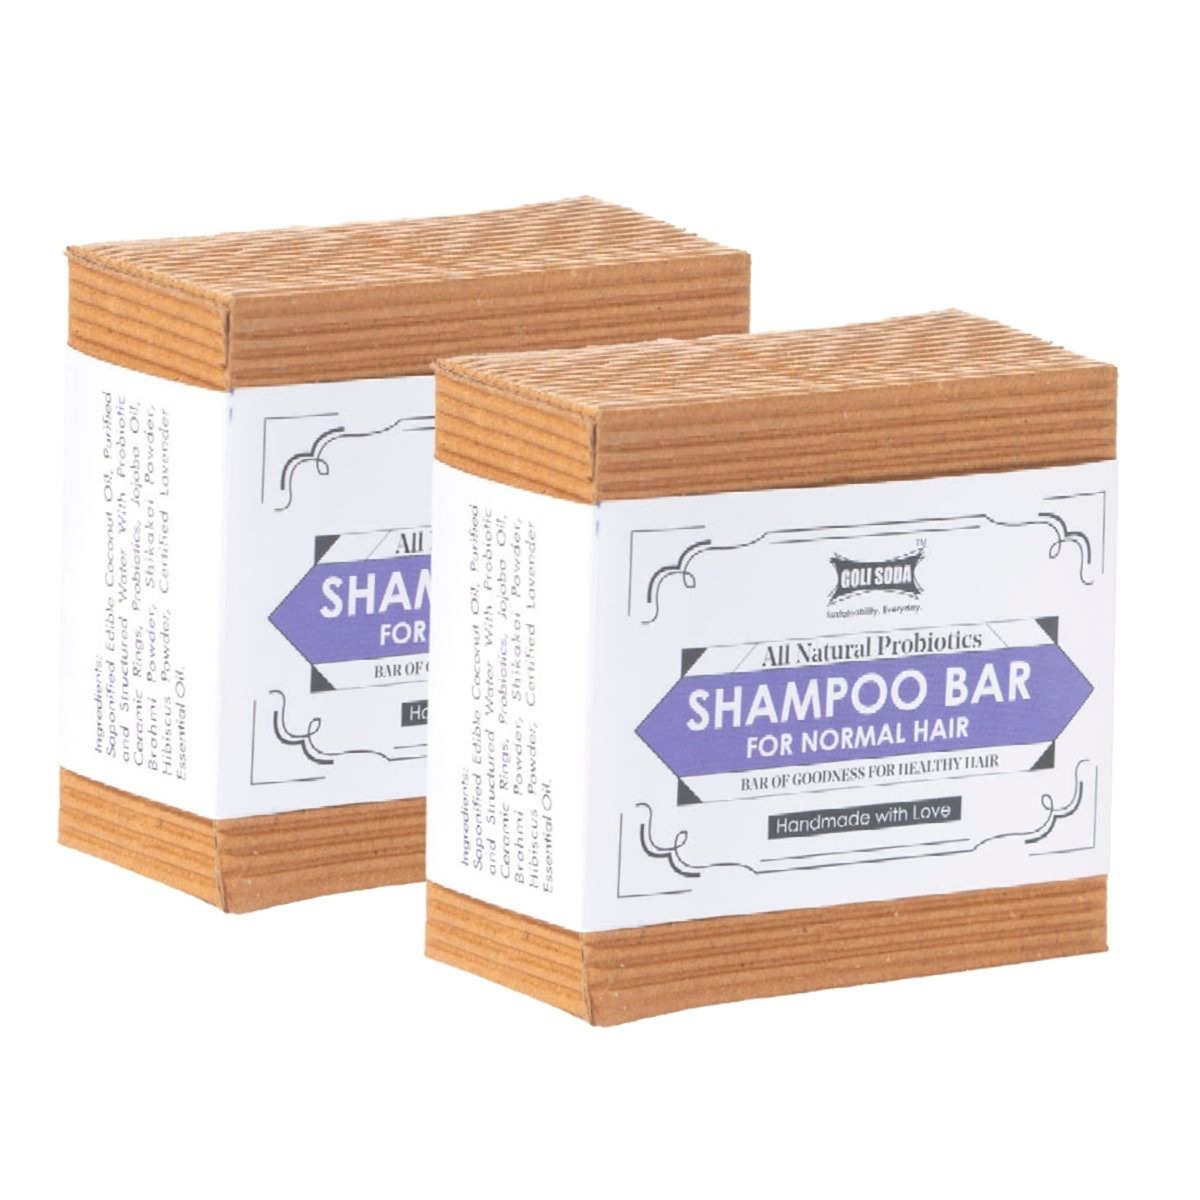 Goli Soda All Natural Probiotics Shampoo Bar for Normal Hair, 90gm - Pack Of 2